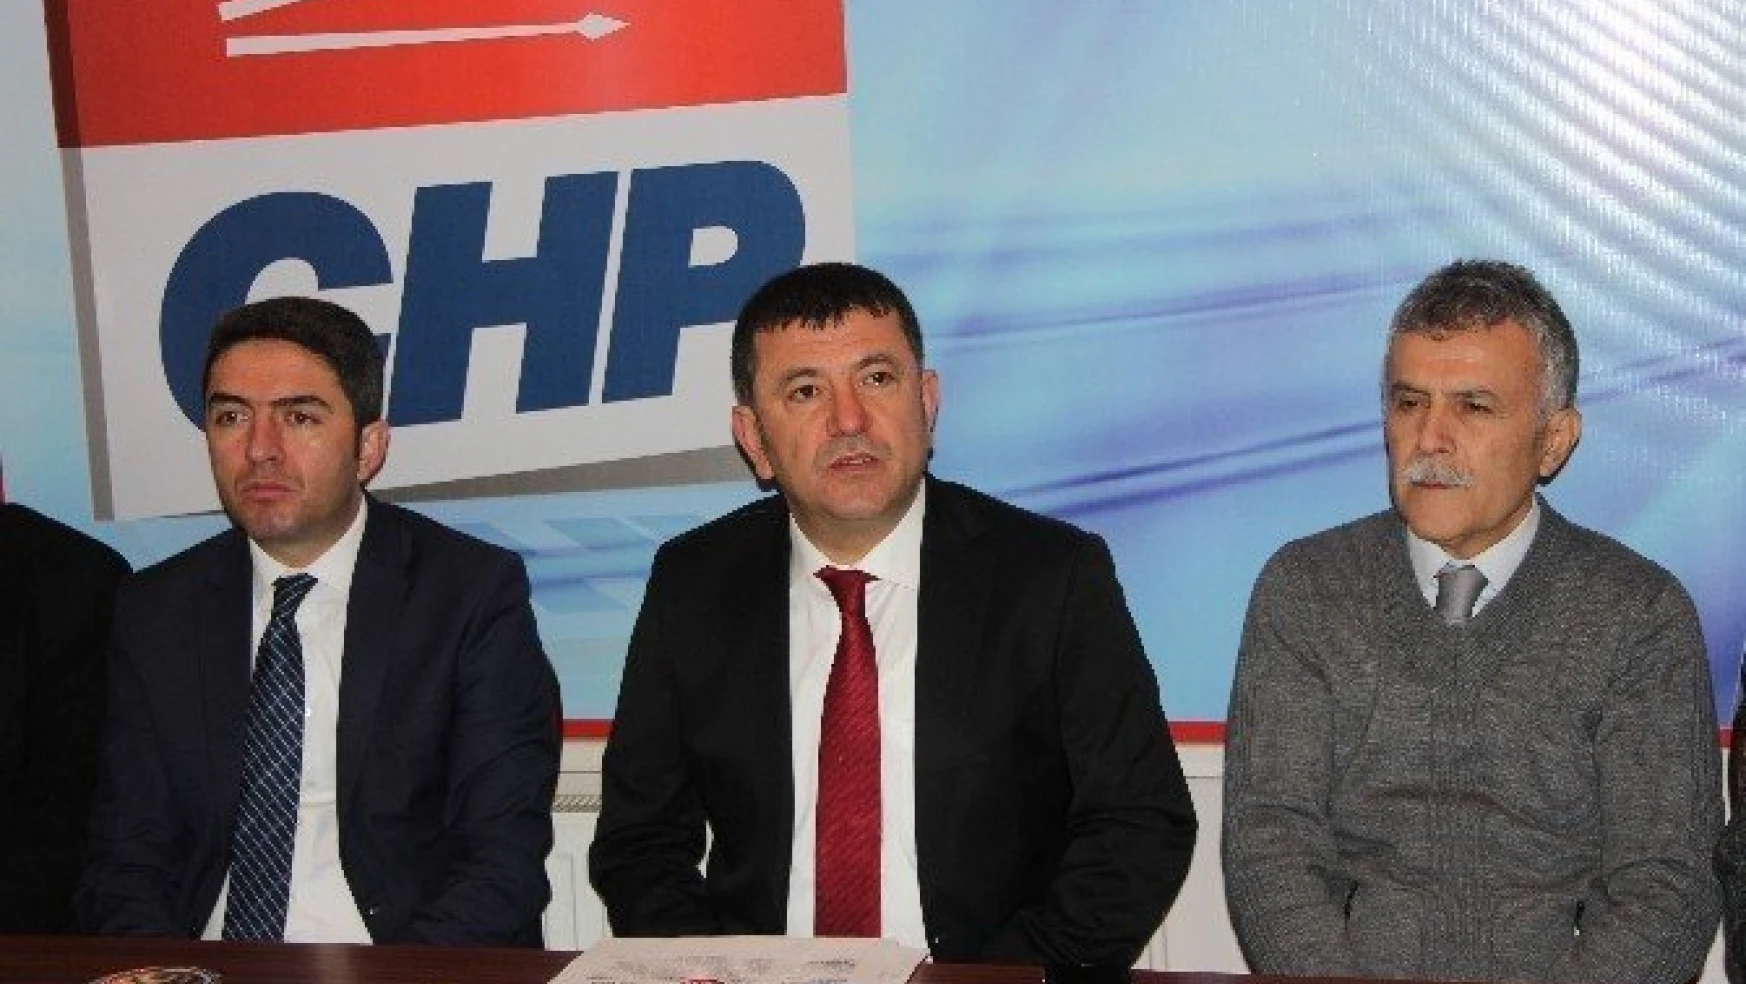 CHP Anayasa Mahkemesi'ne başvuracak
